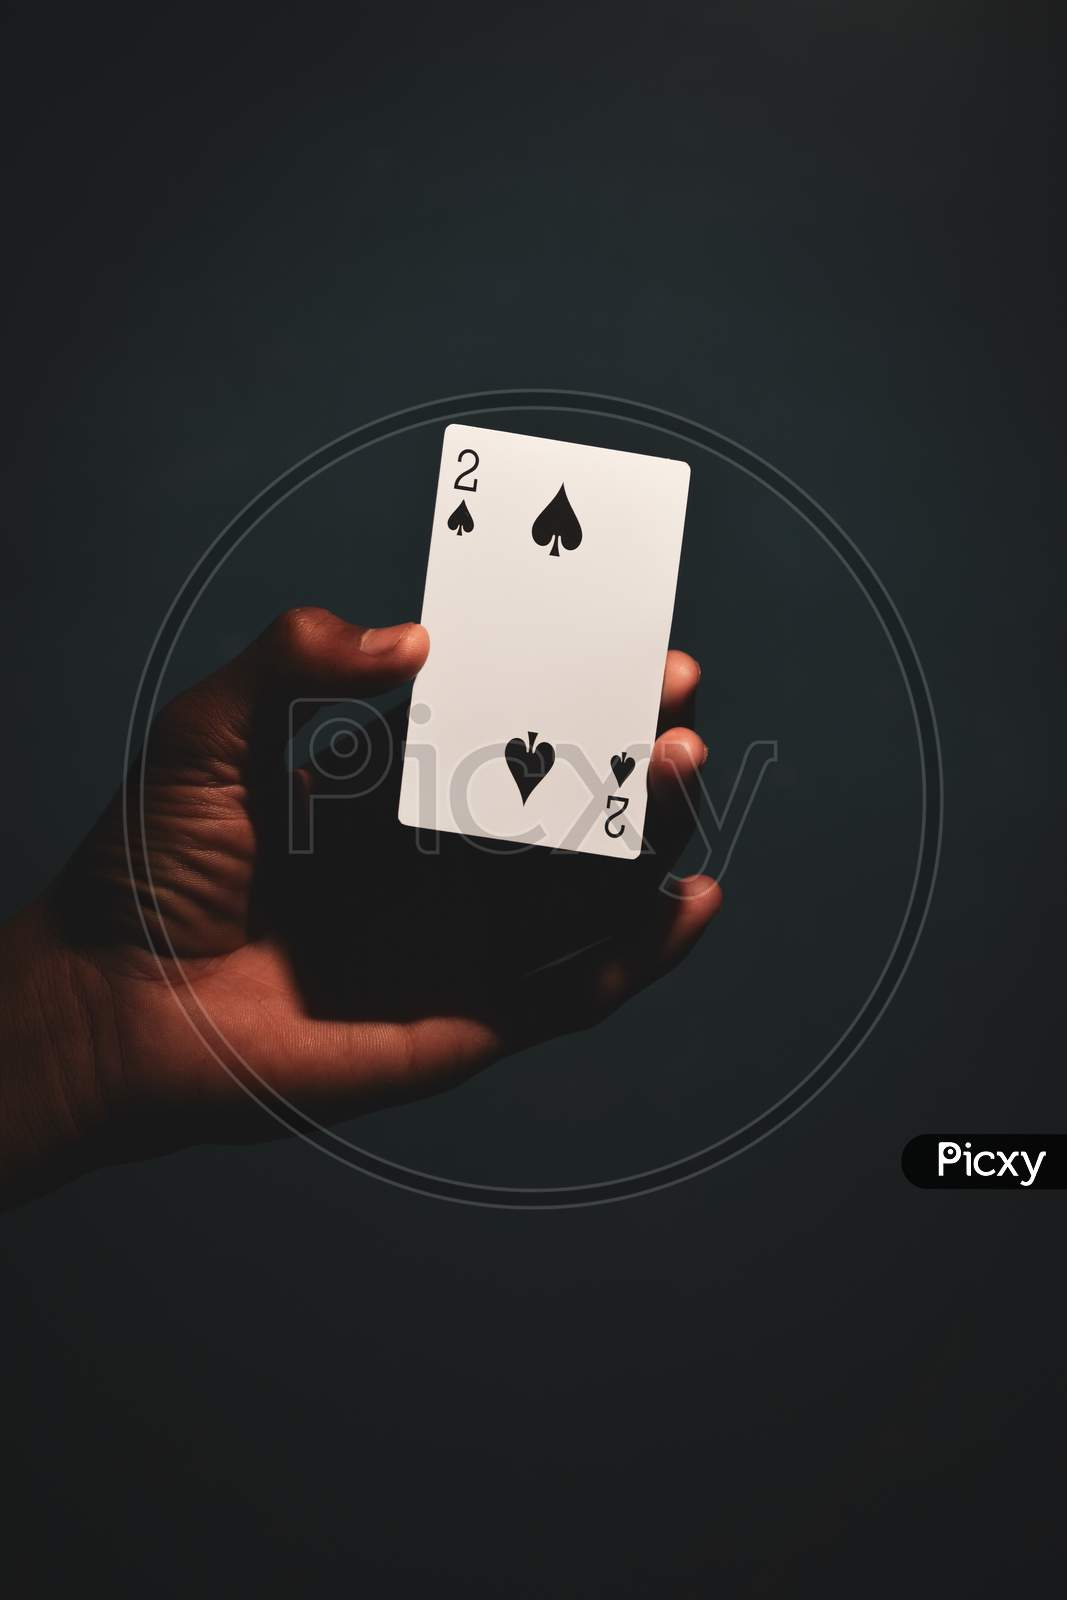 TIKAMGARH, MADHYA PRADESH, INDIA - DECEMBER 15, 2019: Two of spades playing card.